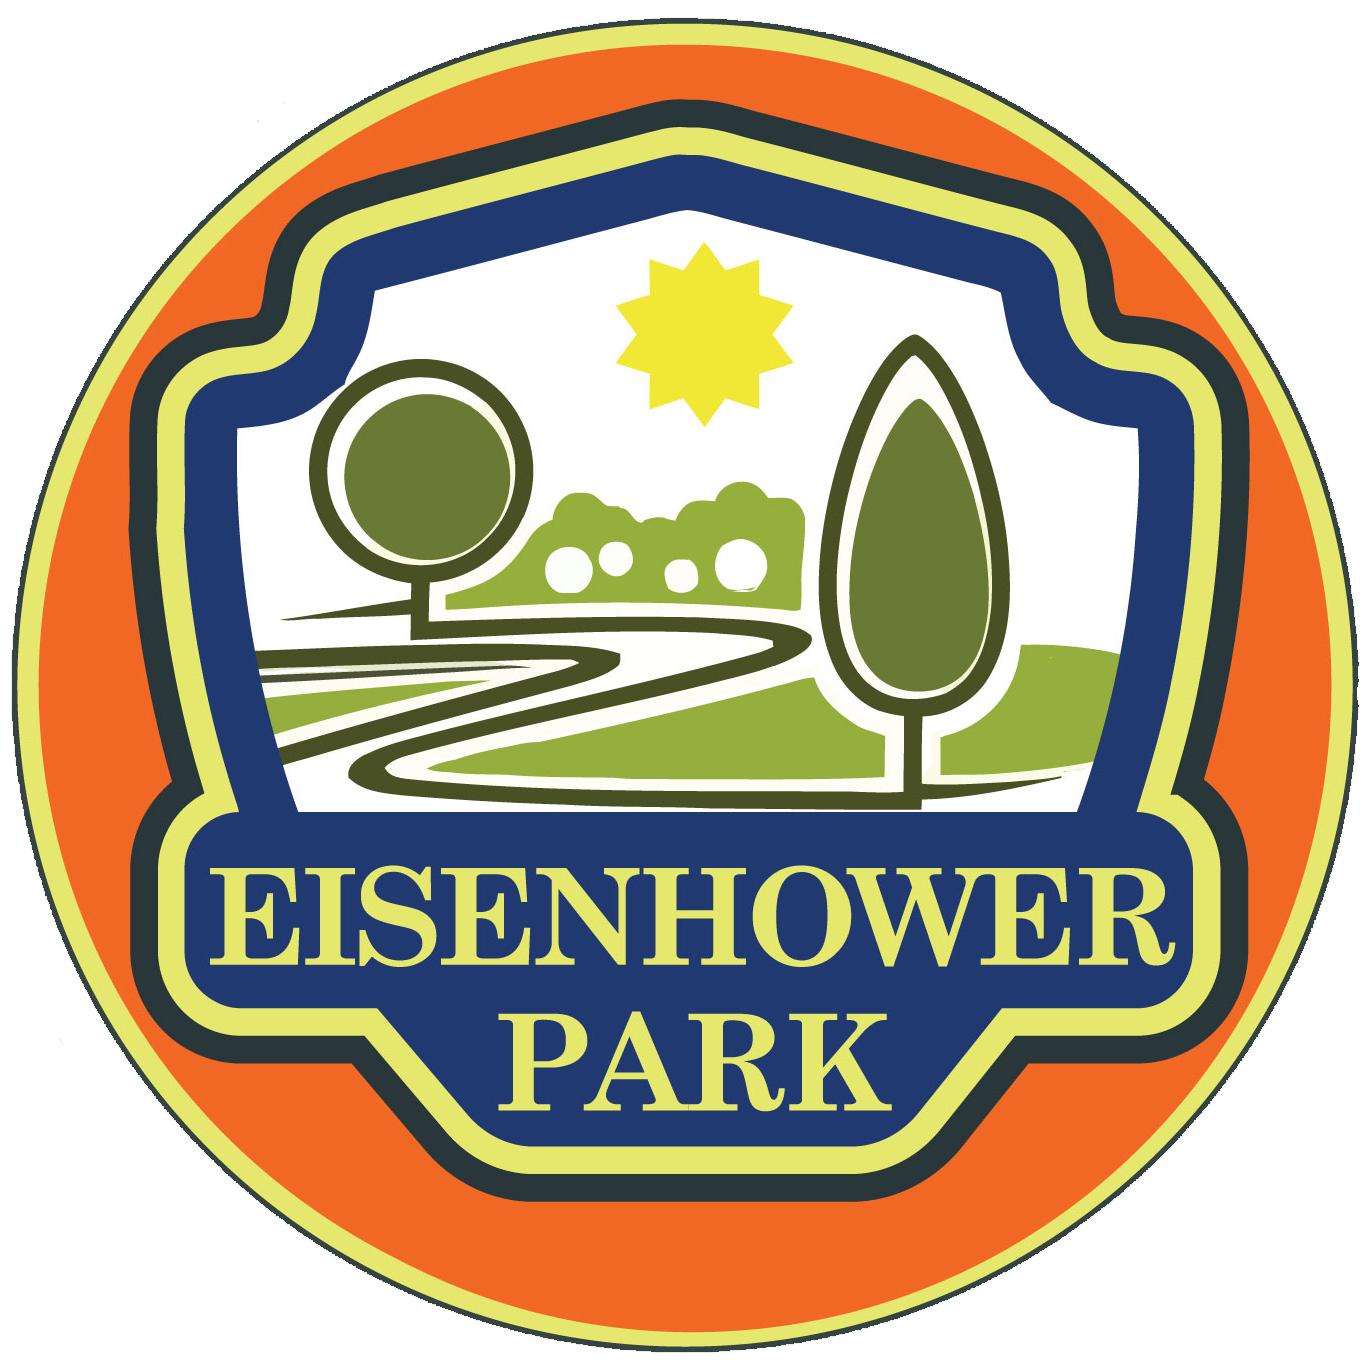 About Eisenhower Park